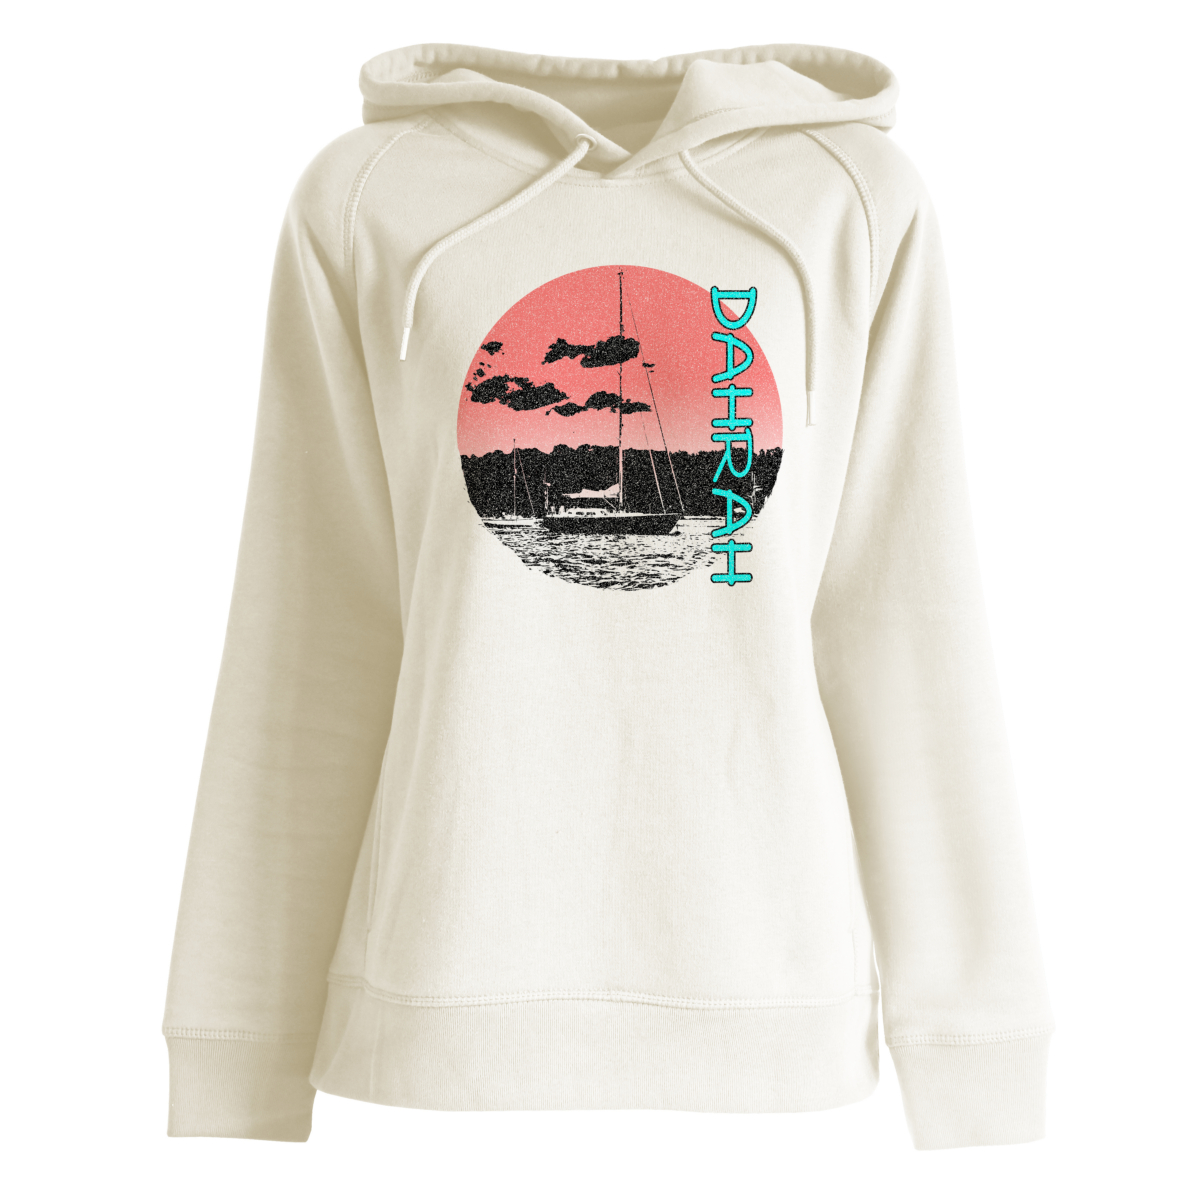 Dahrah Fashion unisex hoodie with print of a sailboat anchored at a beach.